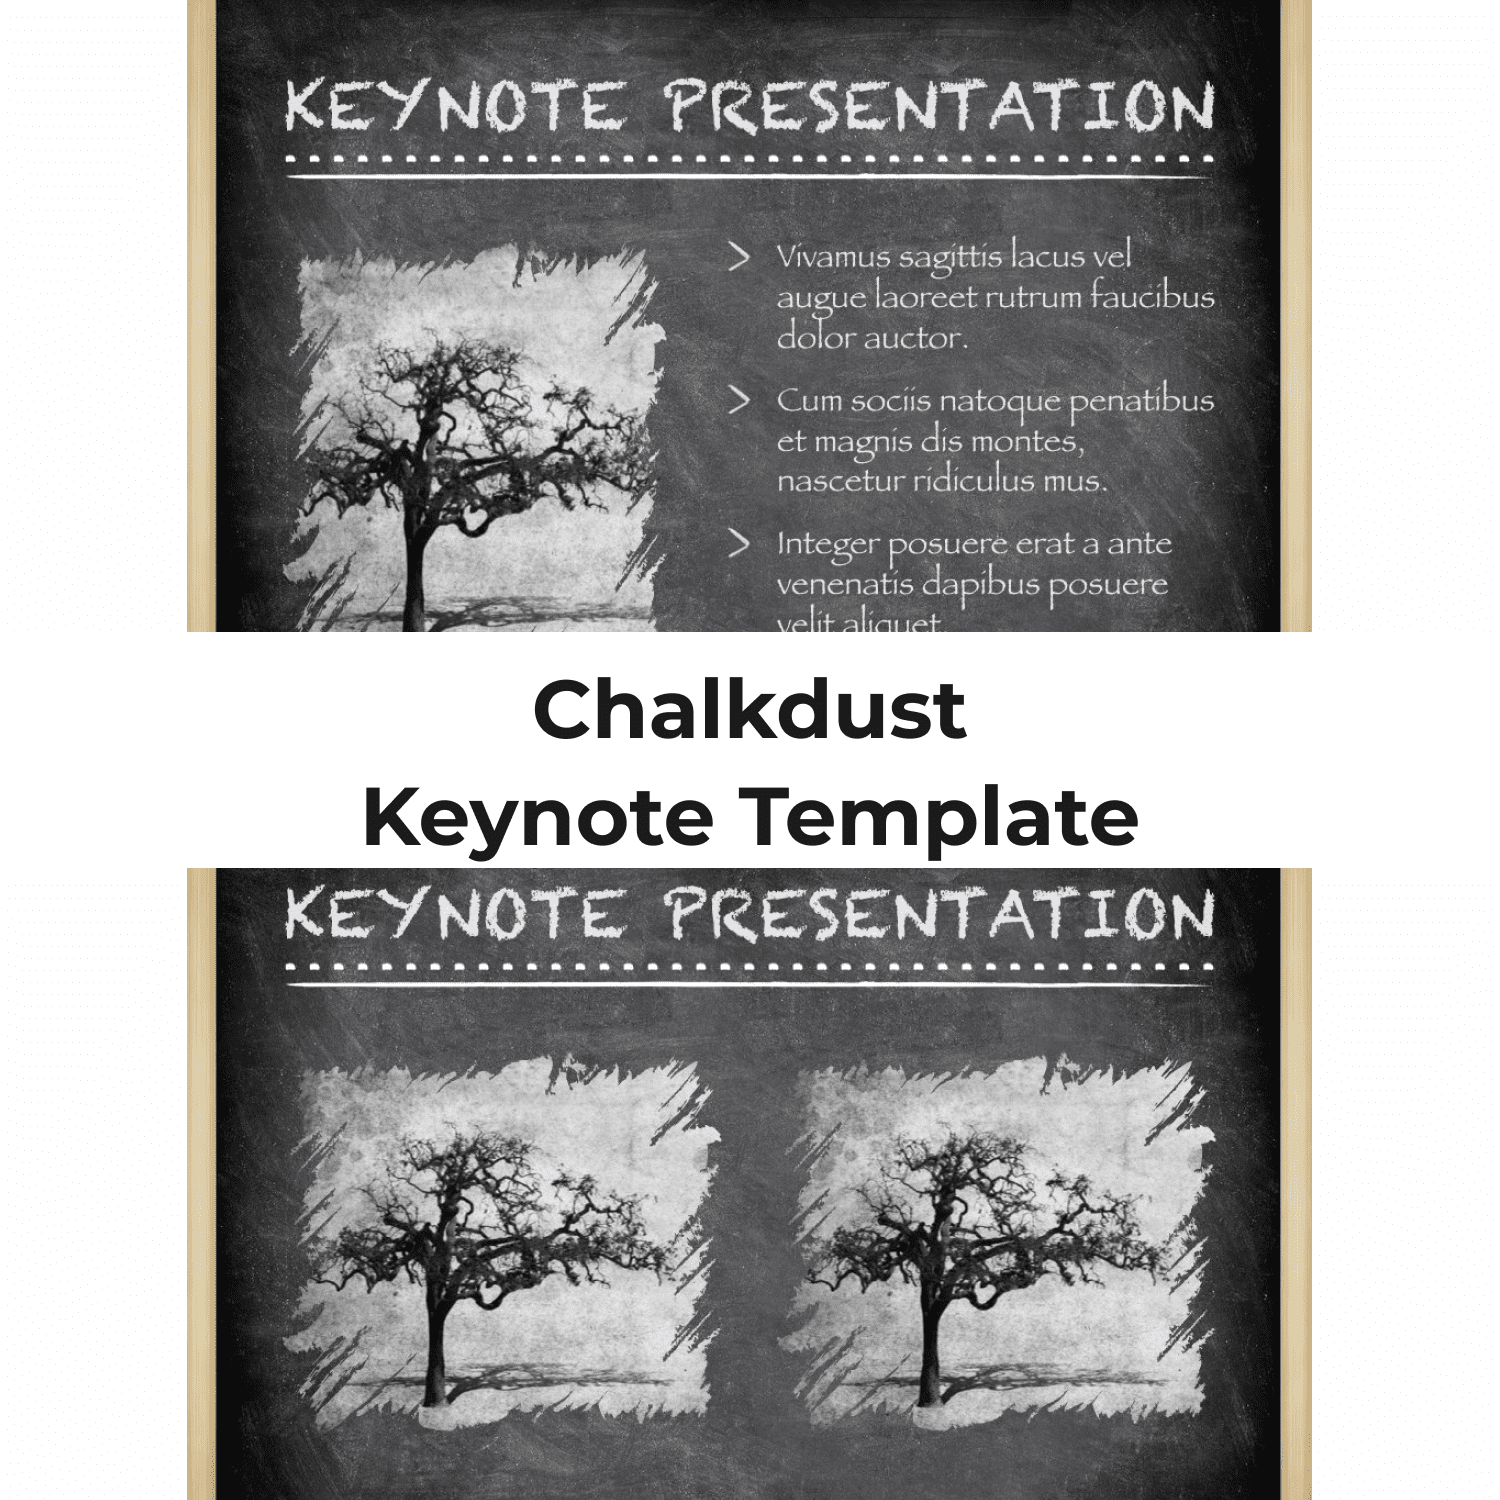 Chalkdust Keynote Template cover.